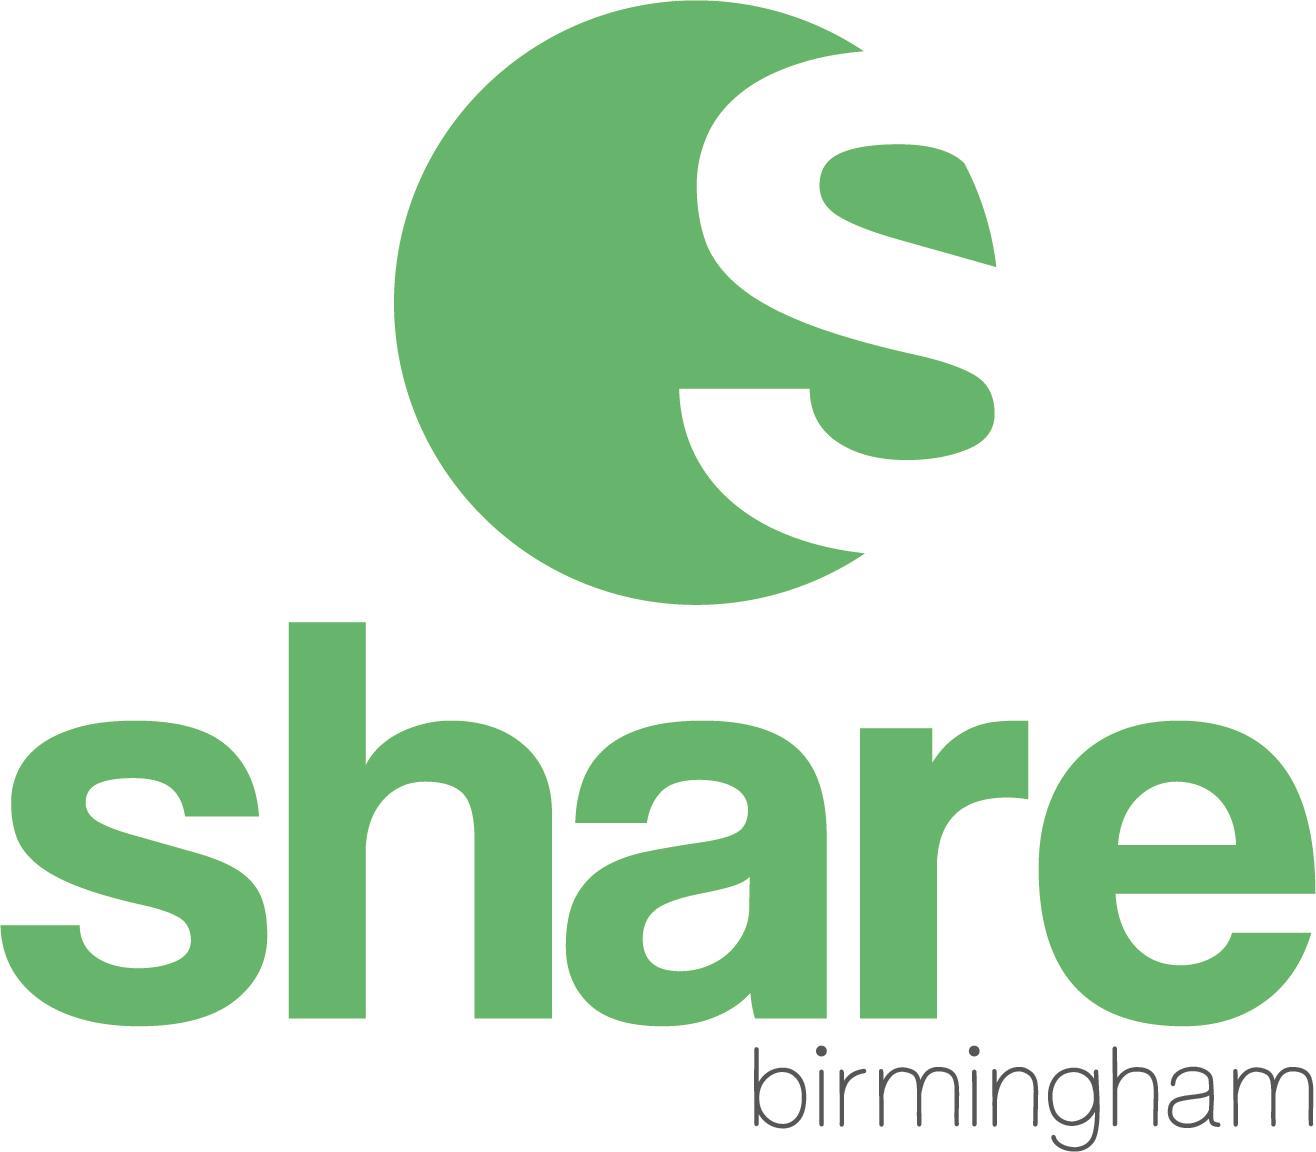 Share Birmingham's